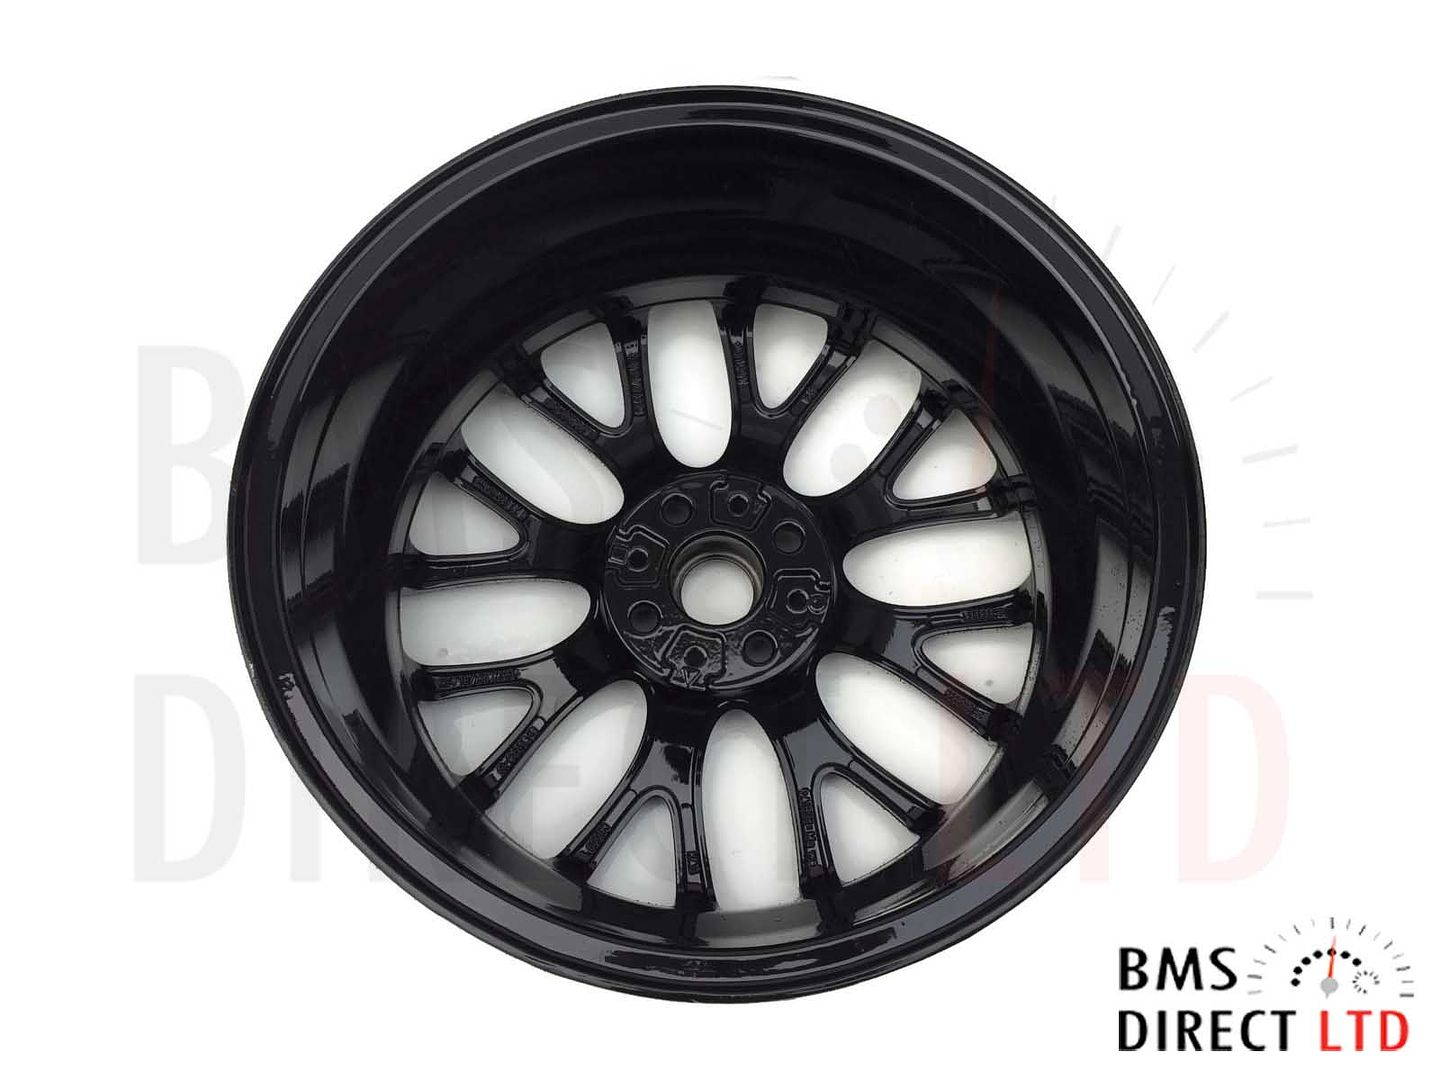 Bmw mini black alloy wheels #6